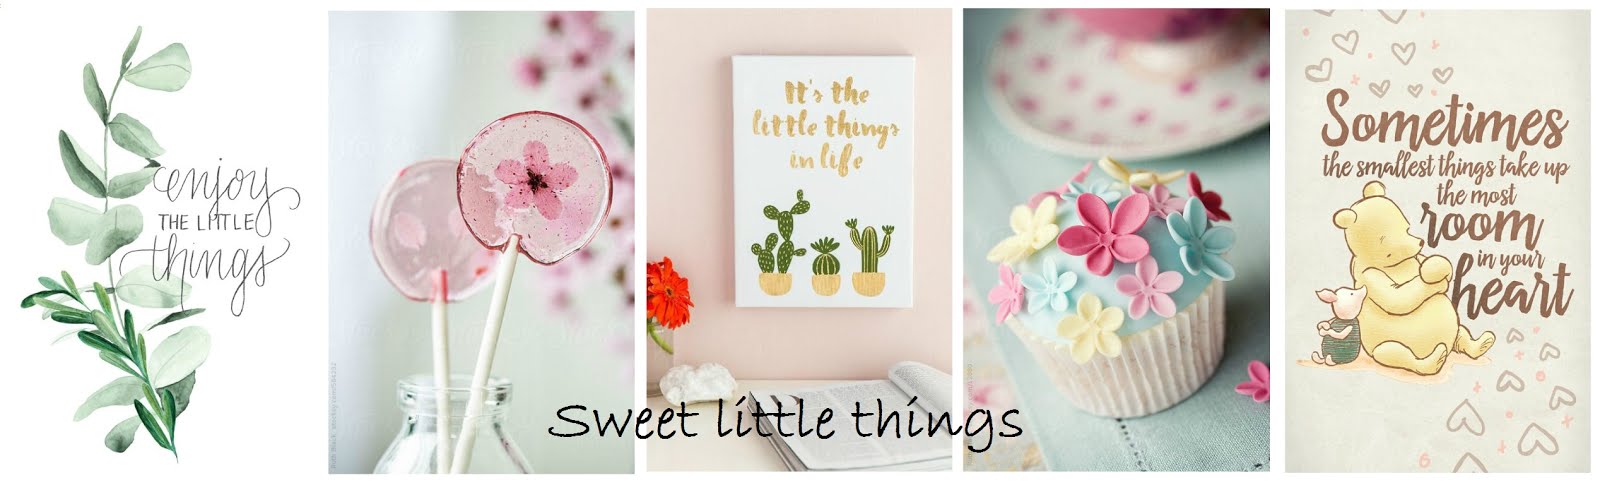 Sweet little things